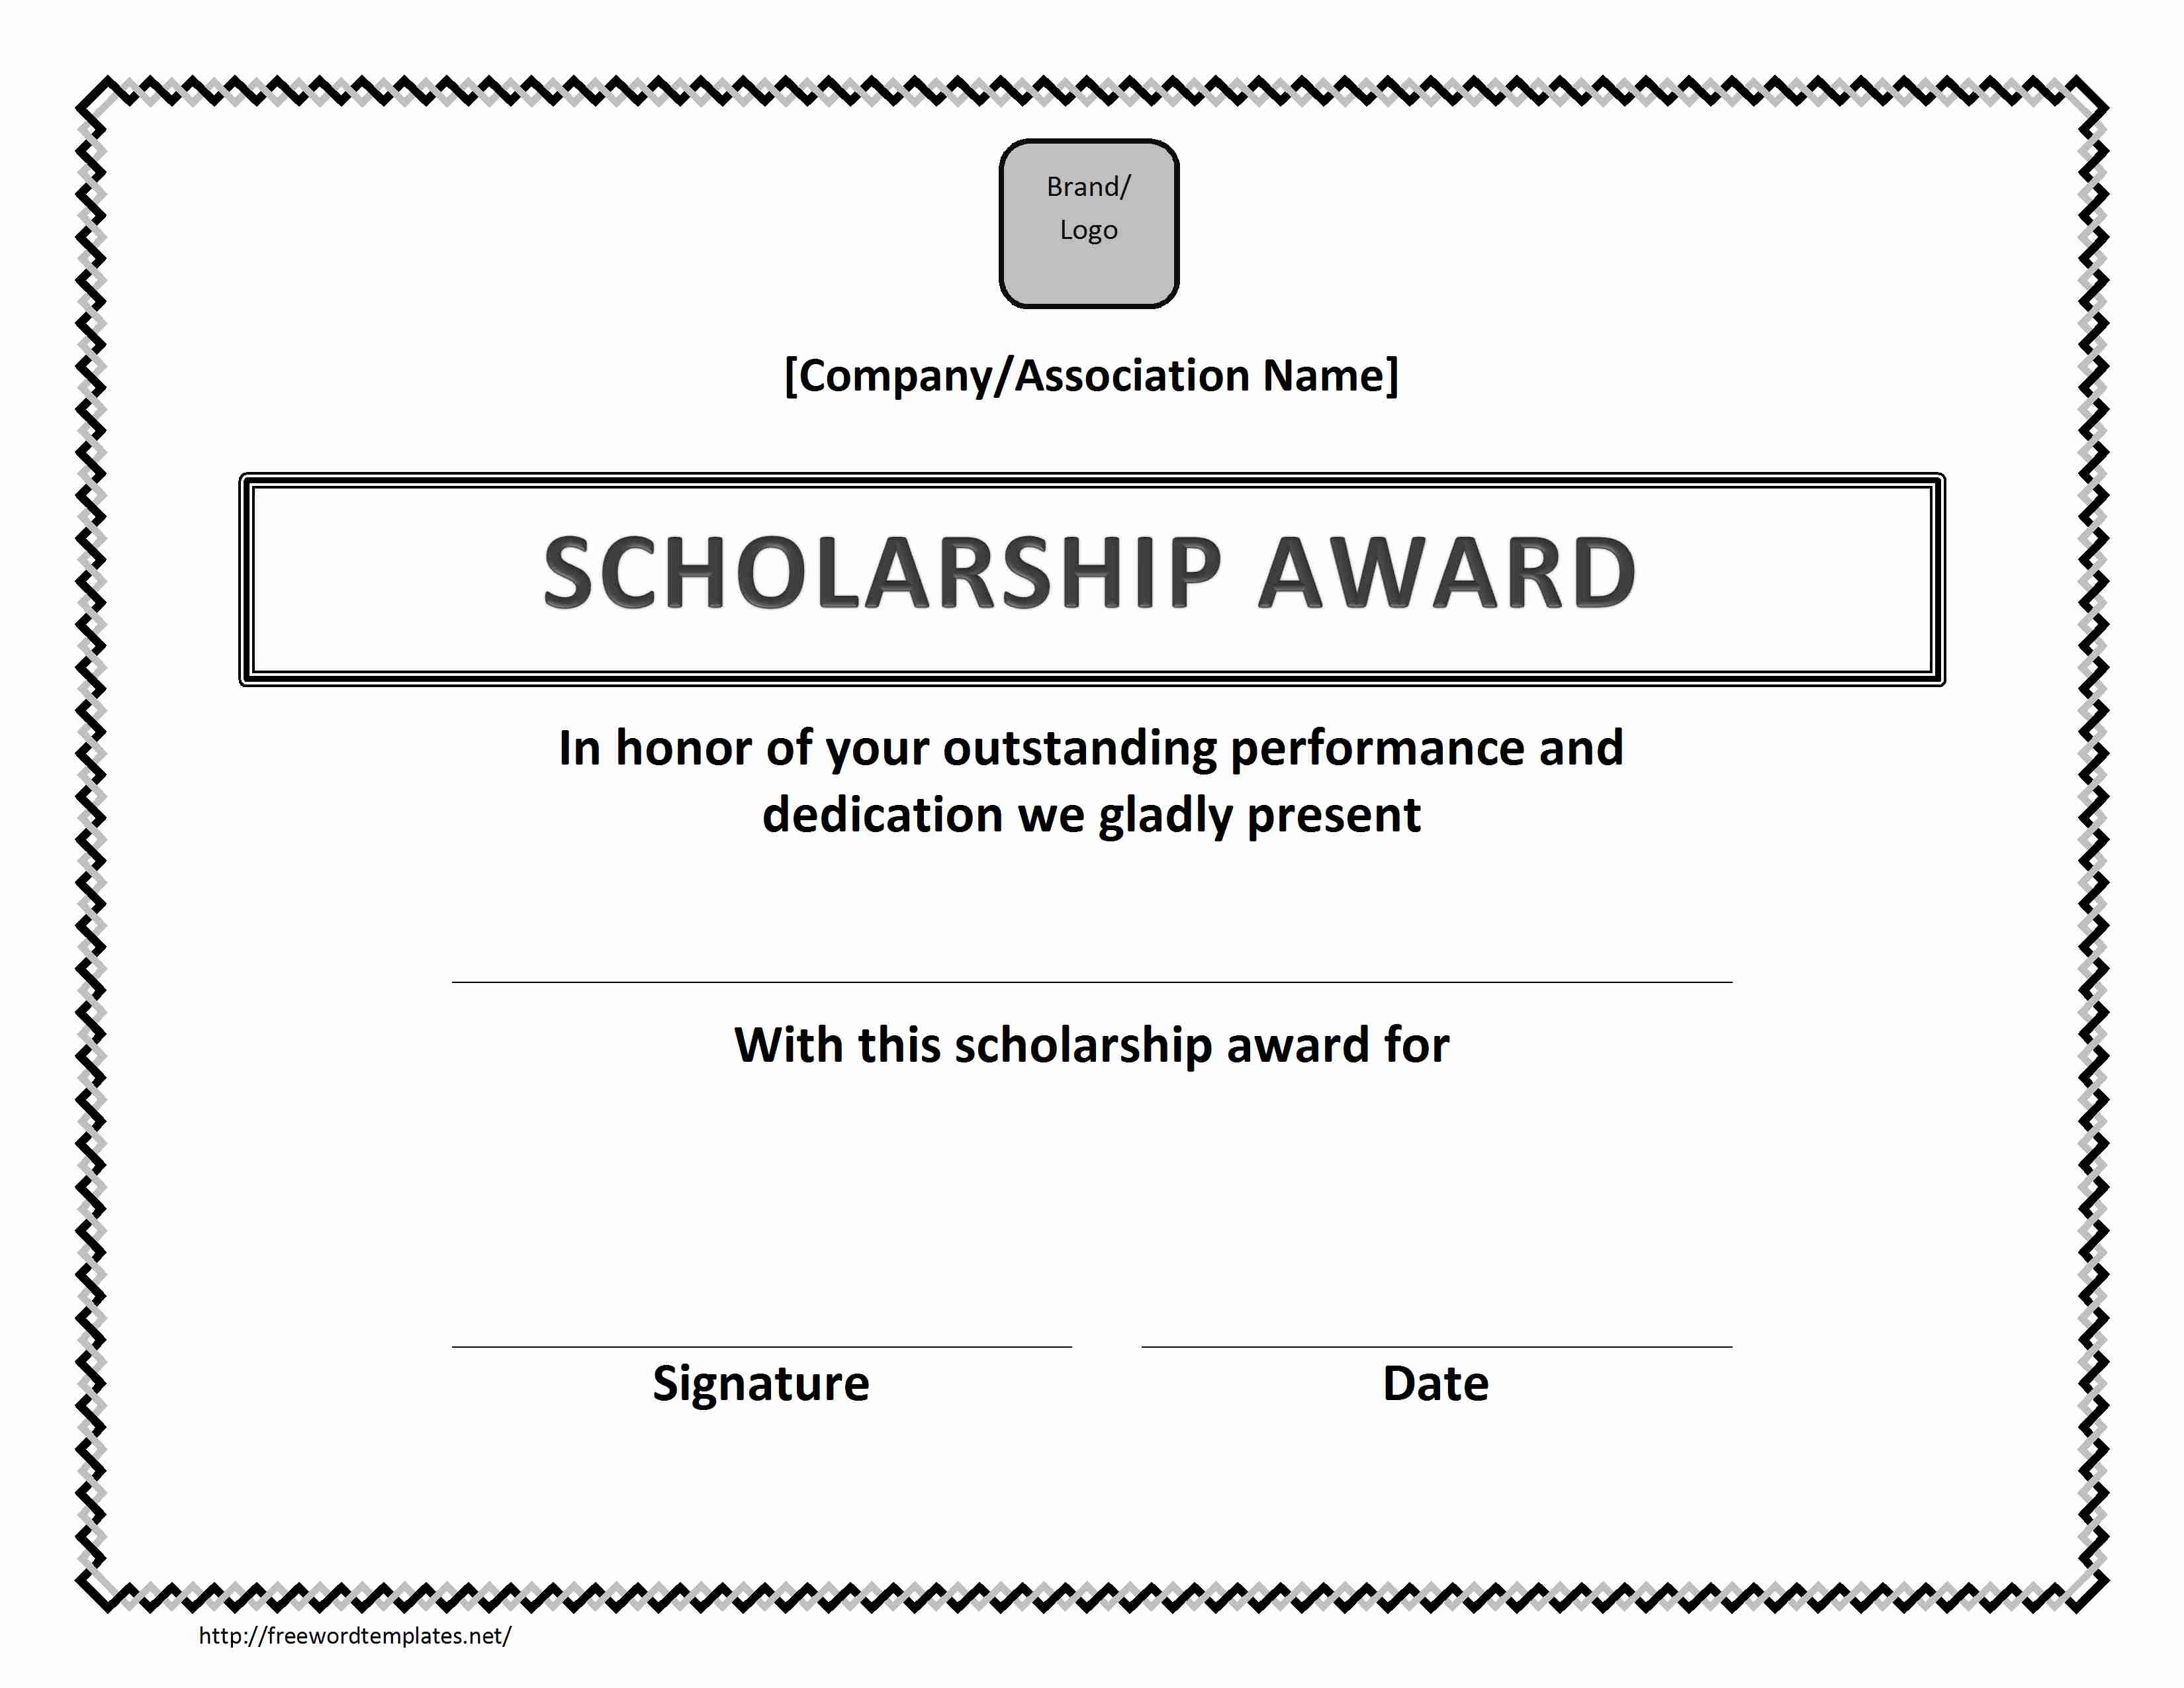 Scholarship Award Certificate Template Free carlynstudio us